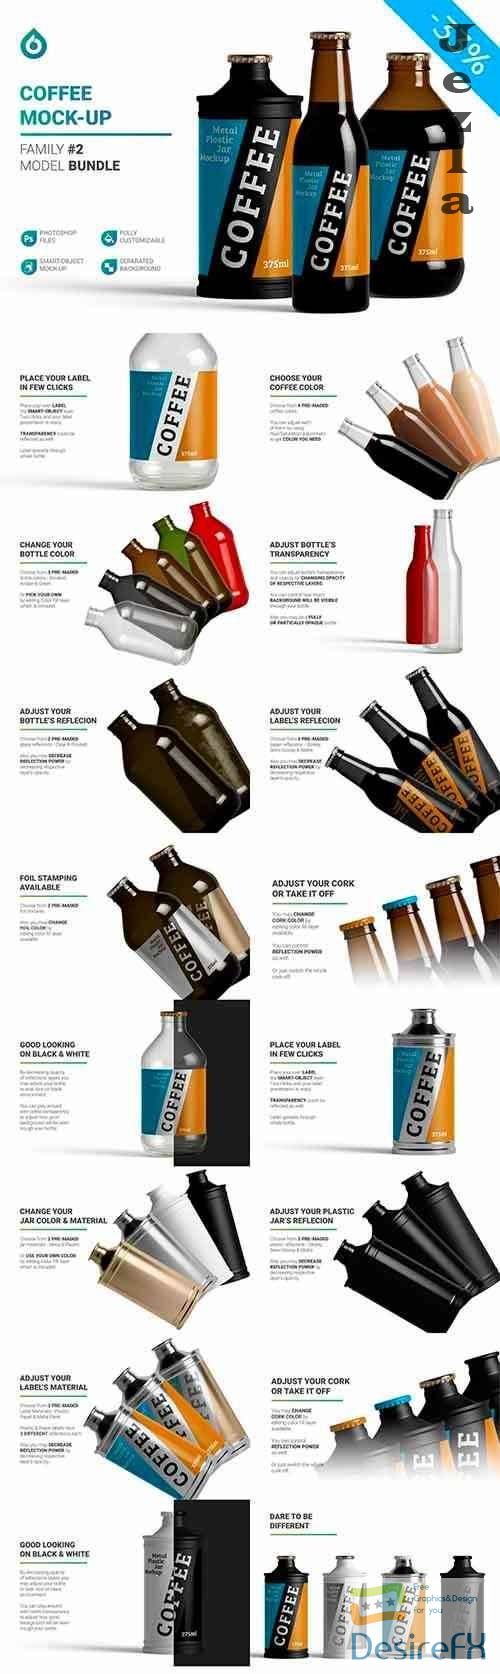 CreativeMarket - Coffee Bottle Jar Mockup 5755421